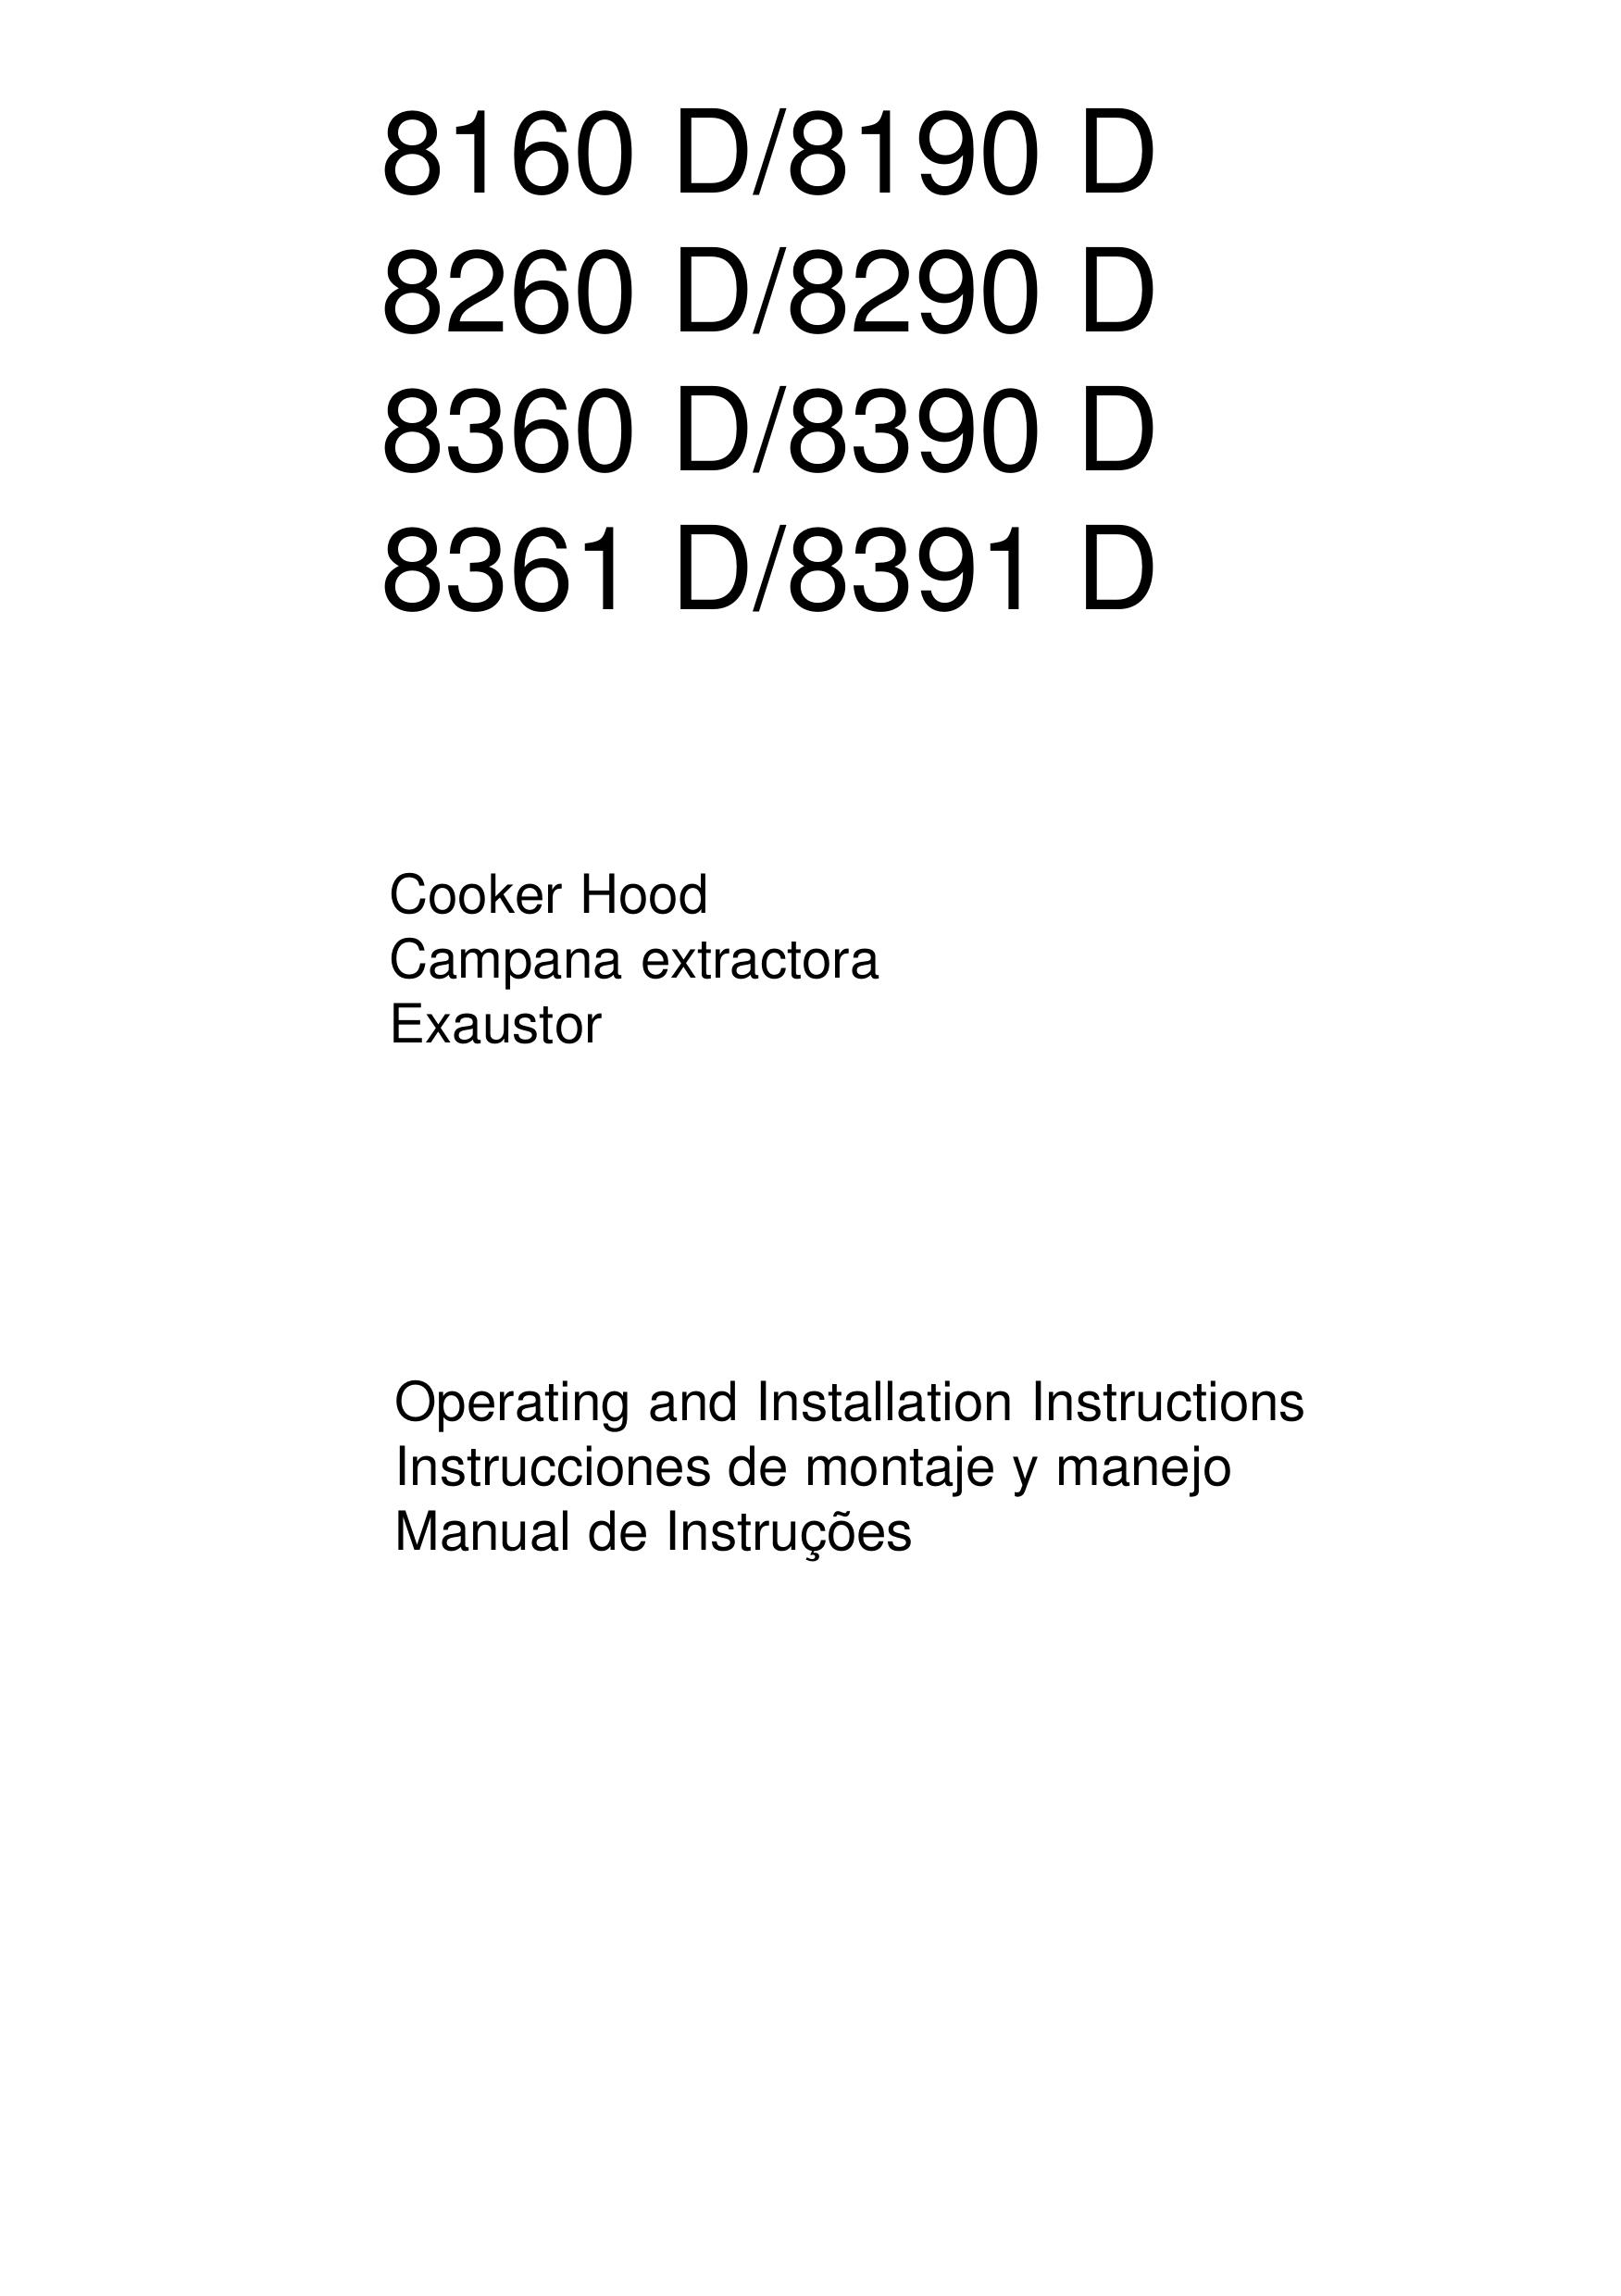 AEG 8390 D Ventilation Hood User Manual